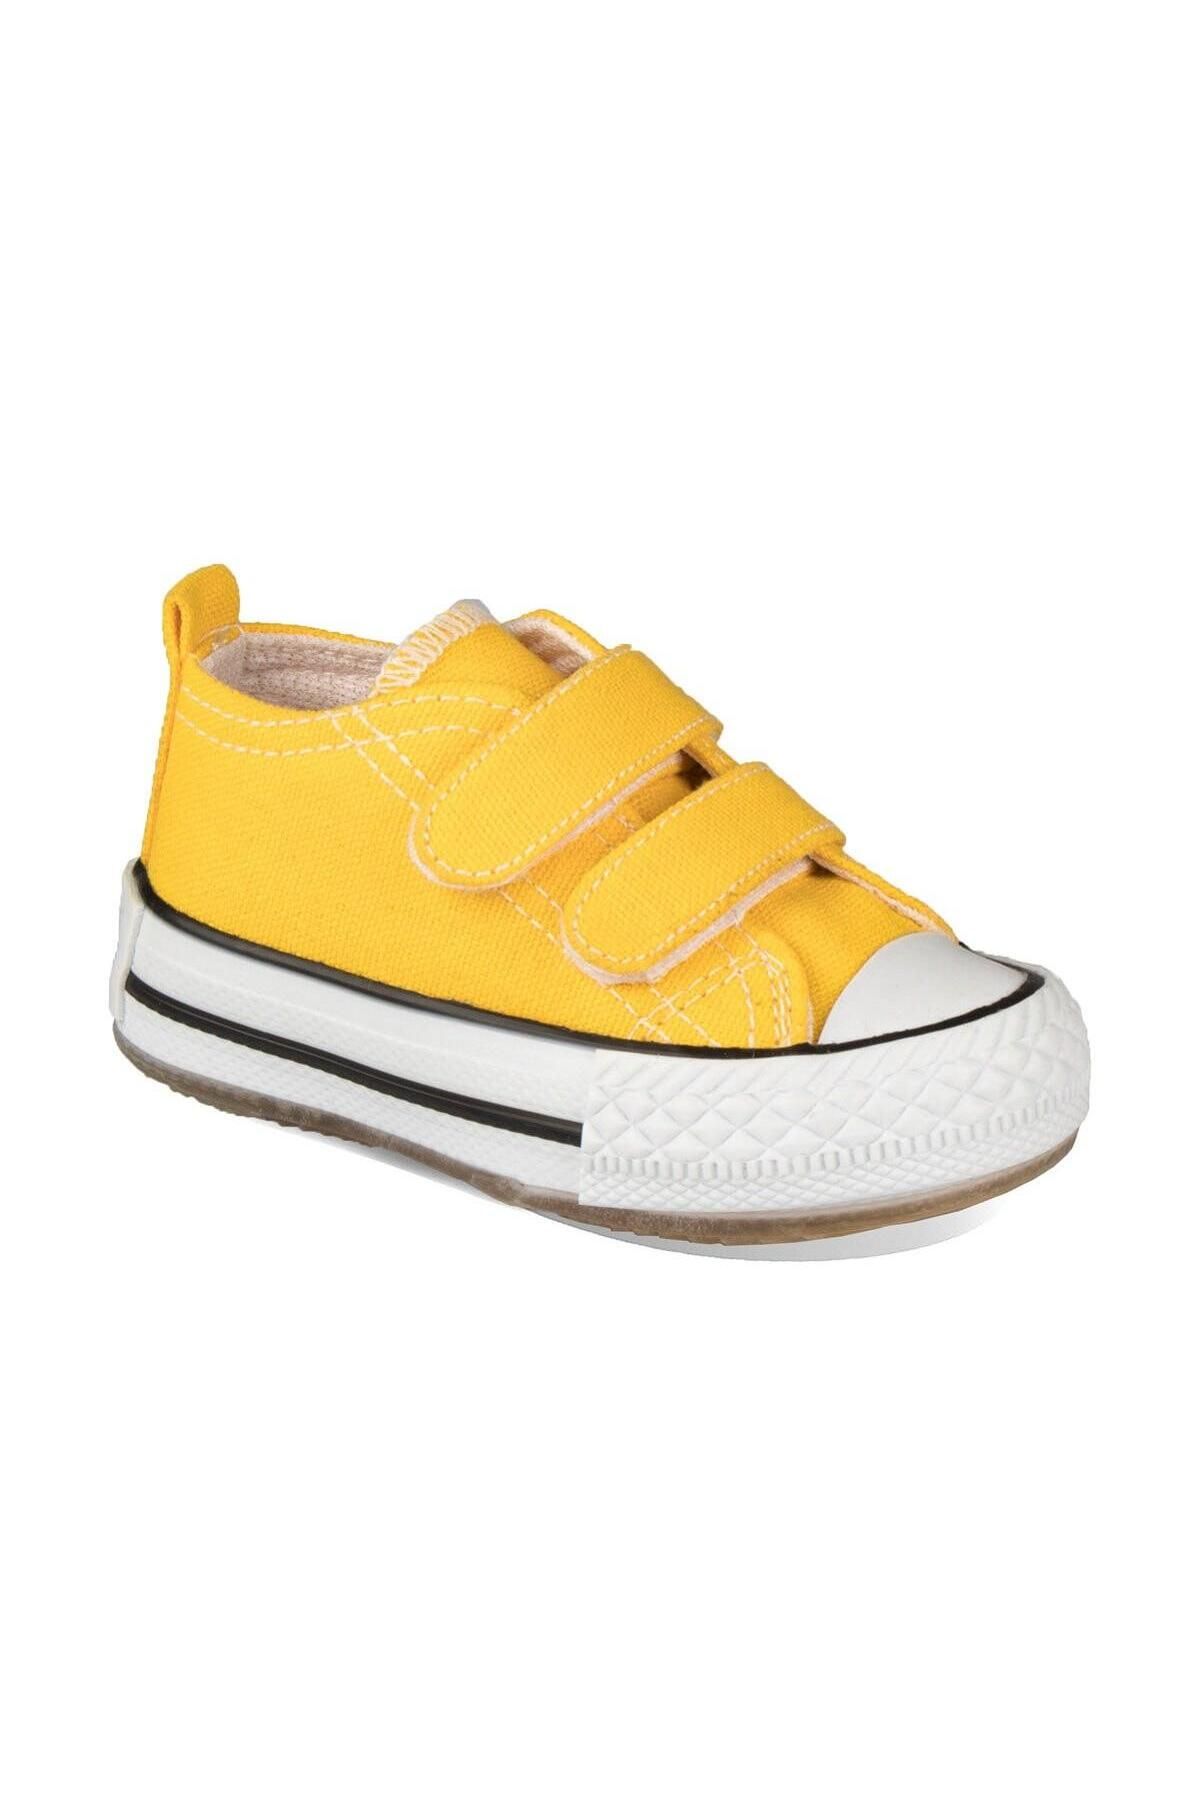 Vicco 925b20y150 Çocuk Ayakkabı Sarı